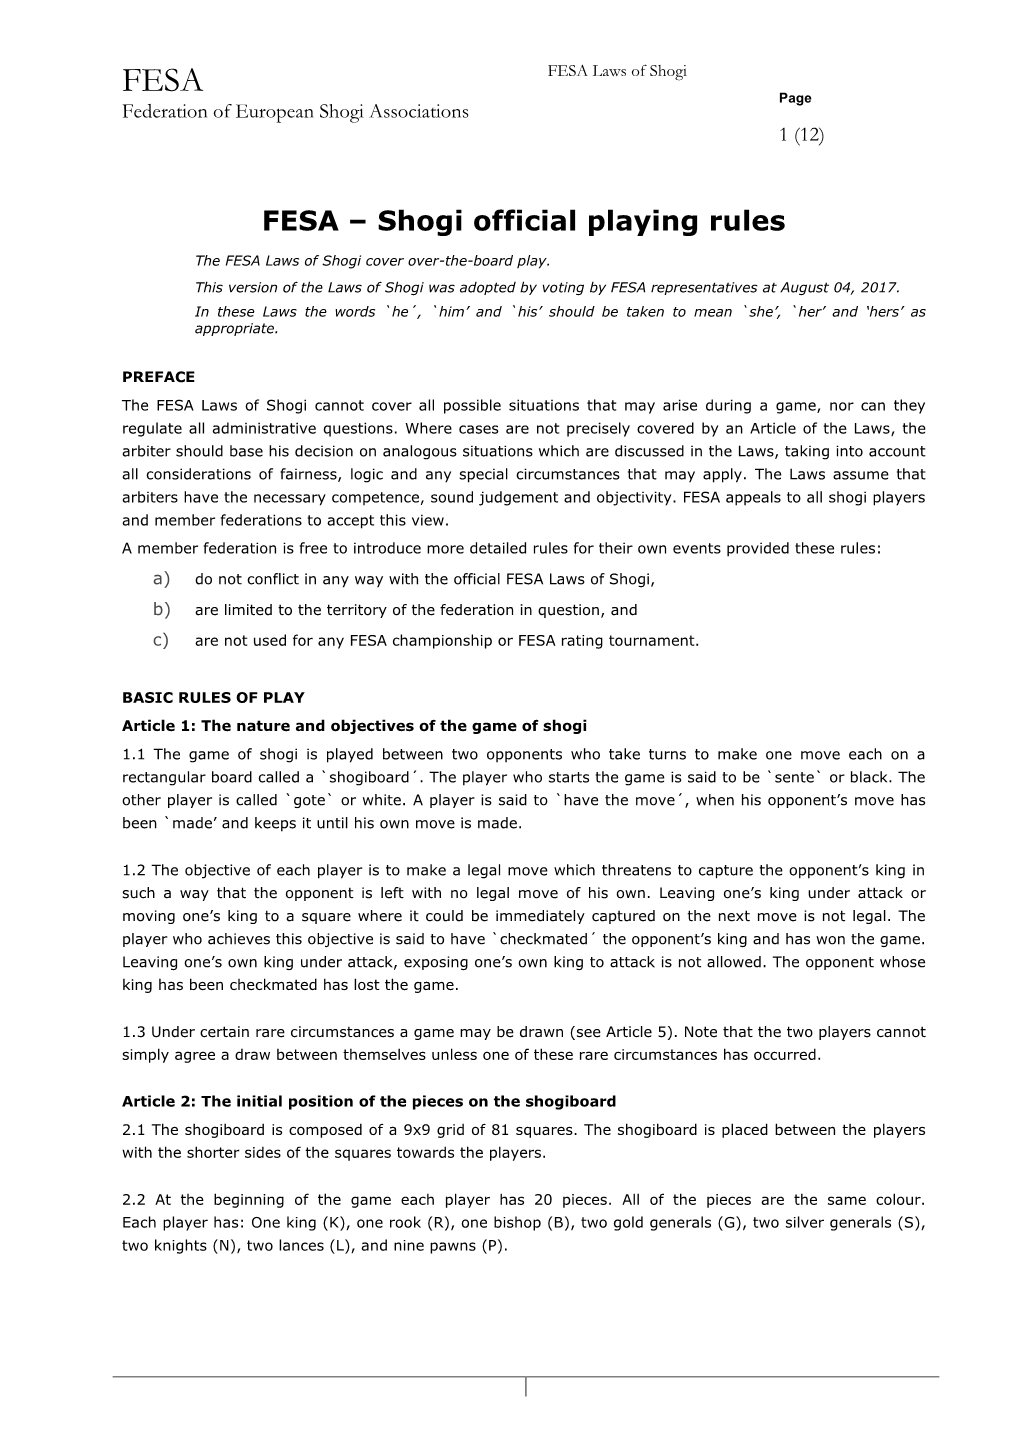 FESA – Shogi Official Playing Rules